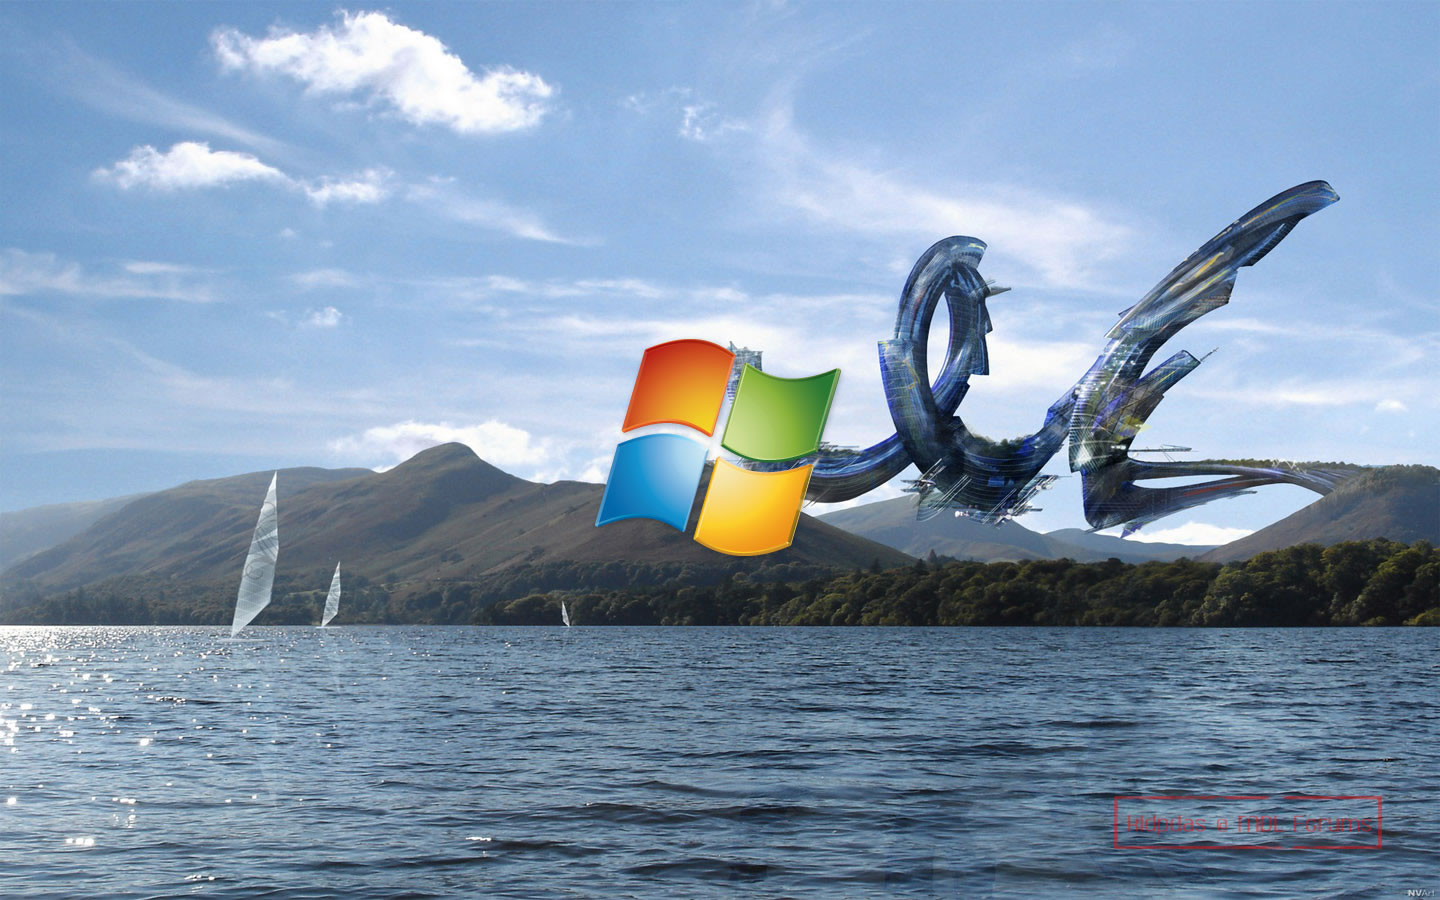 88 Wonderful Windows 8 Wallpapers « Windows.AppStorm